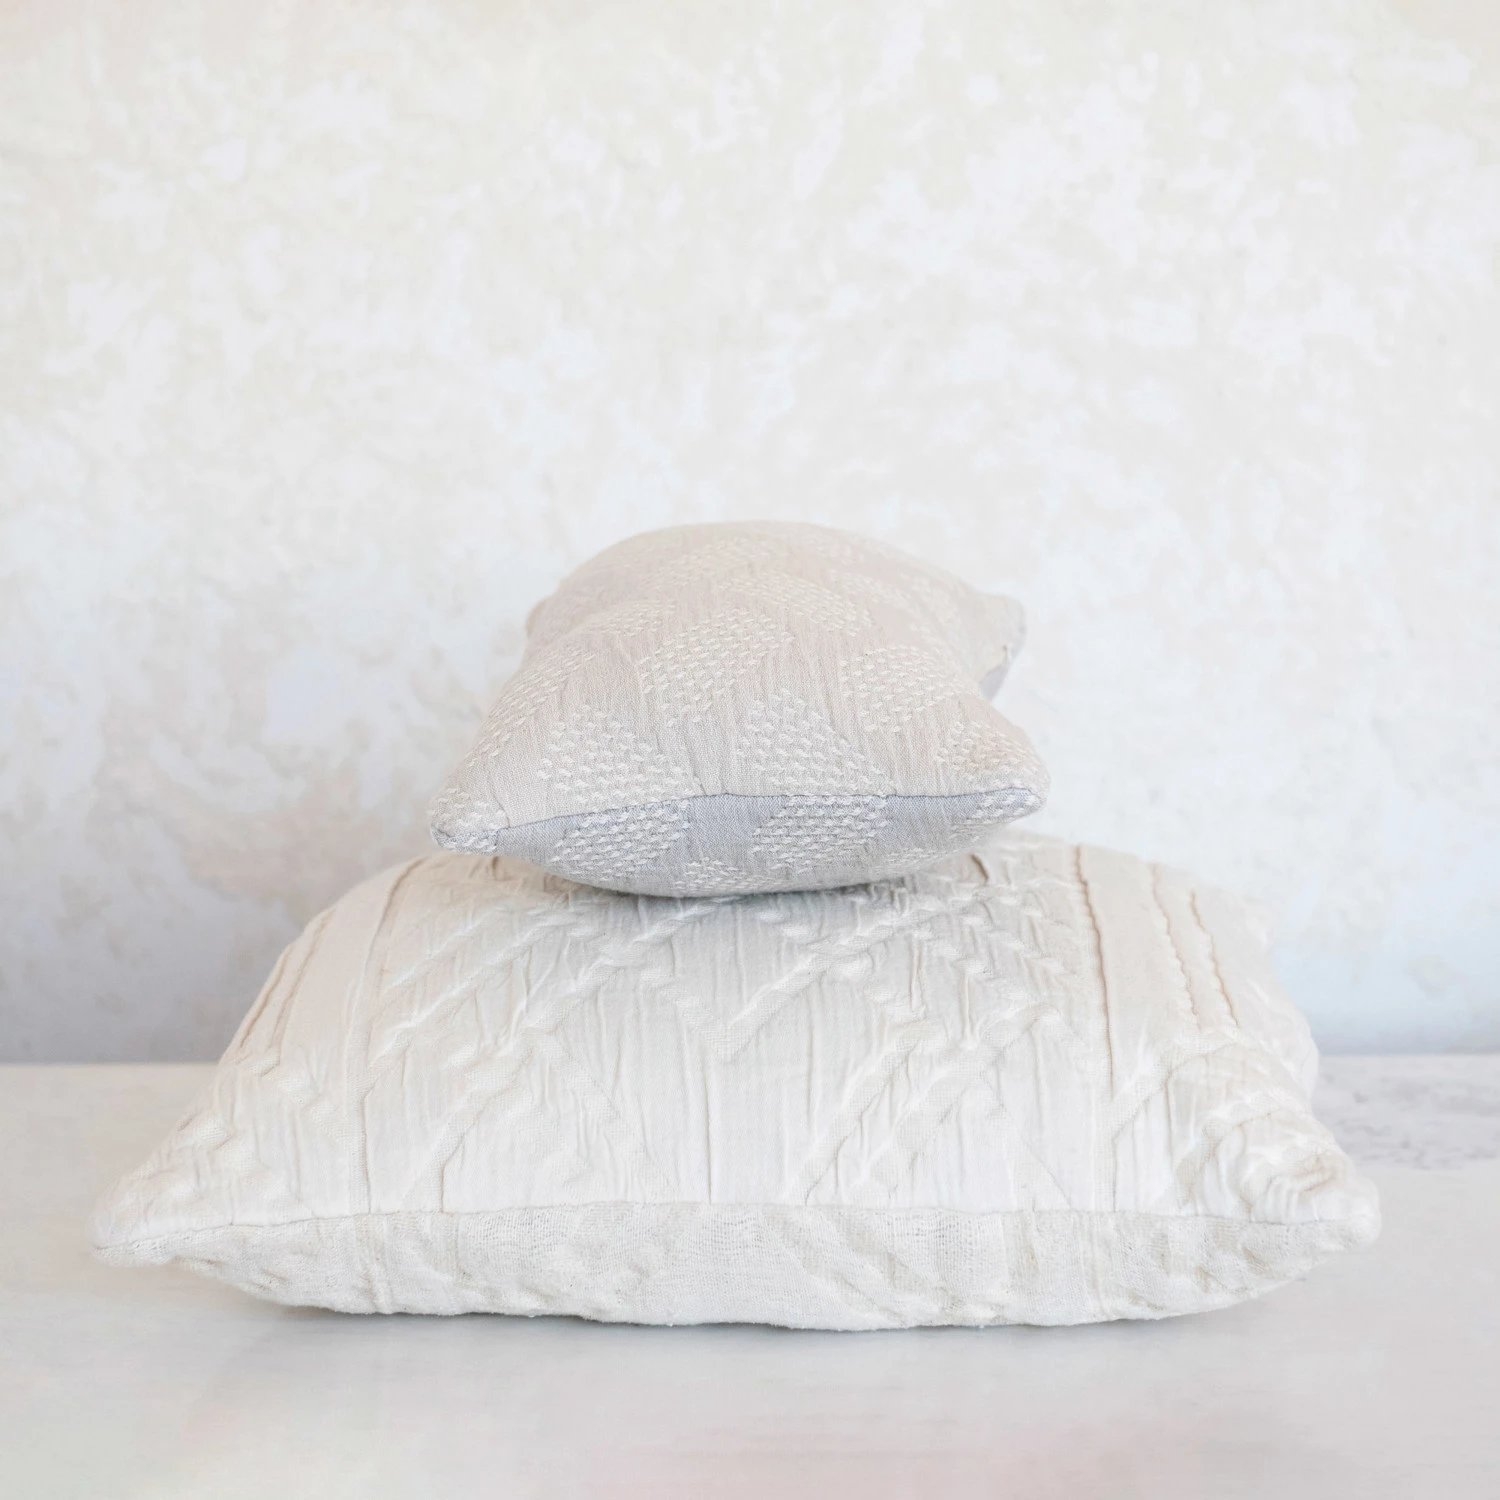 Woven Cotton Jacquard Pillow - Image 1